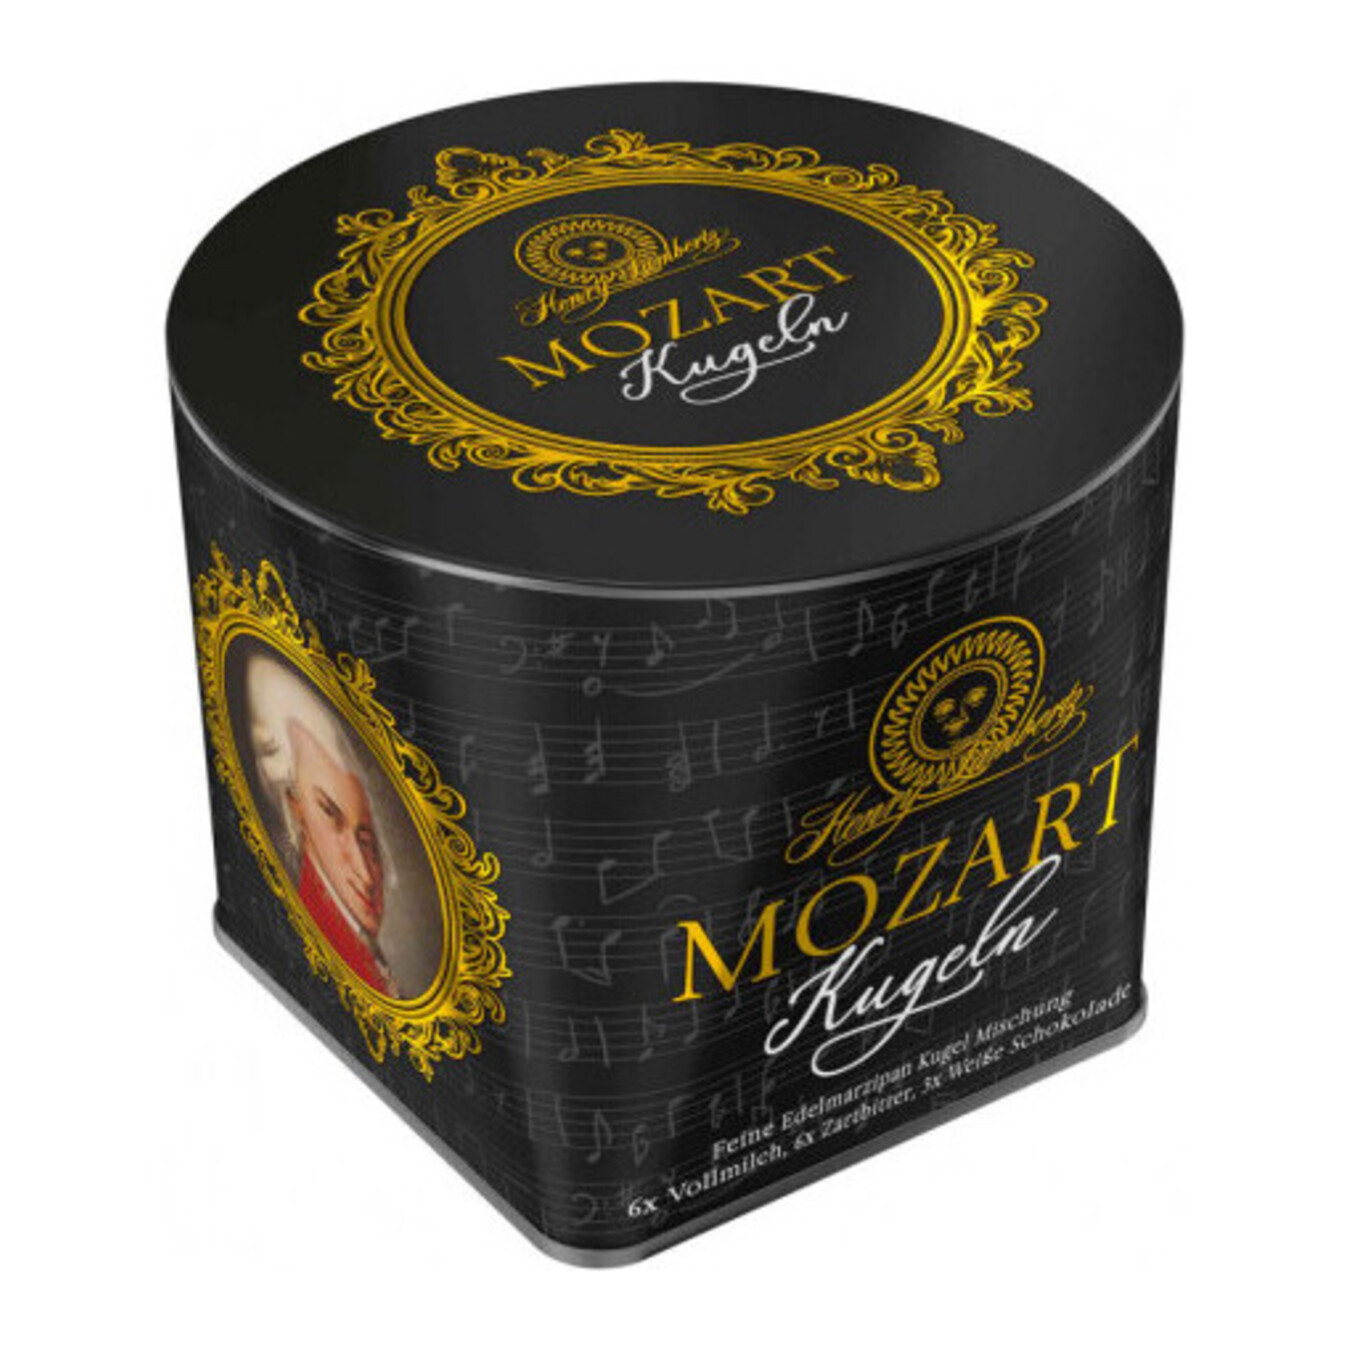 Candies Mozart praline mix in a tin box 300g